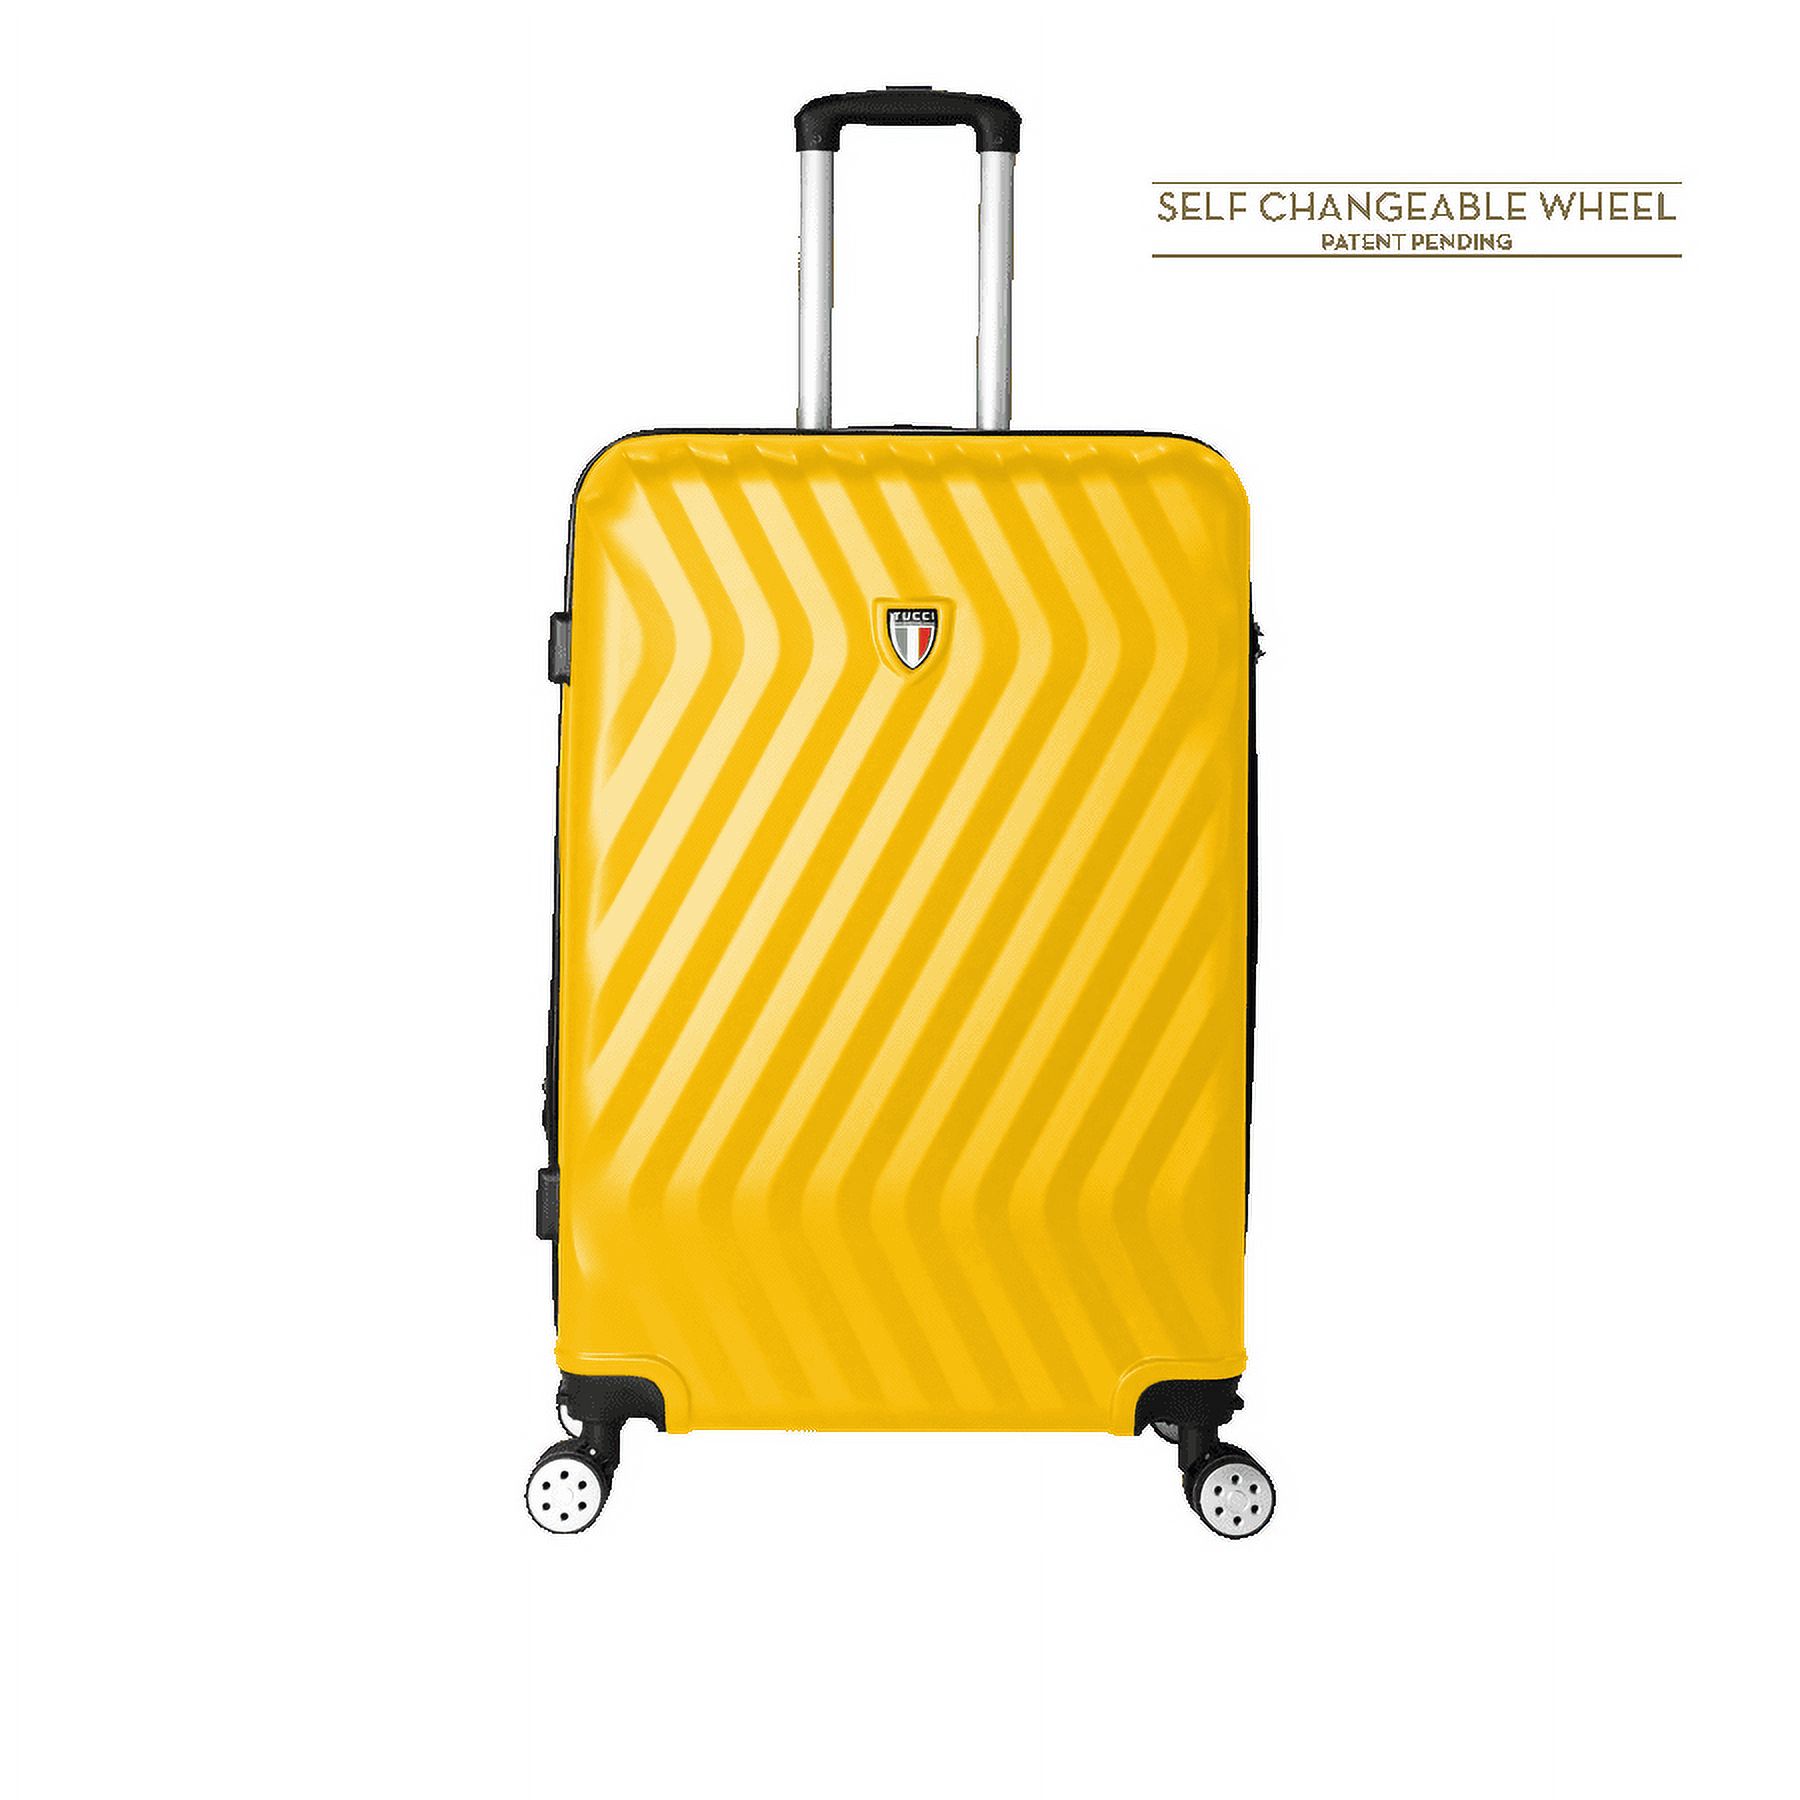 MUTEVOLE 20" Carry-On Luggage Bag Travel Suitcase - image 1 of 4